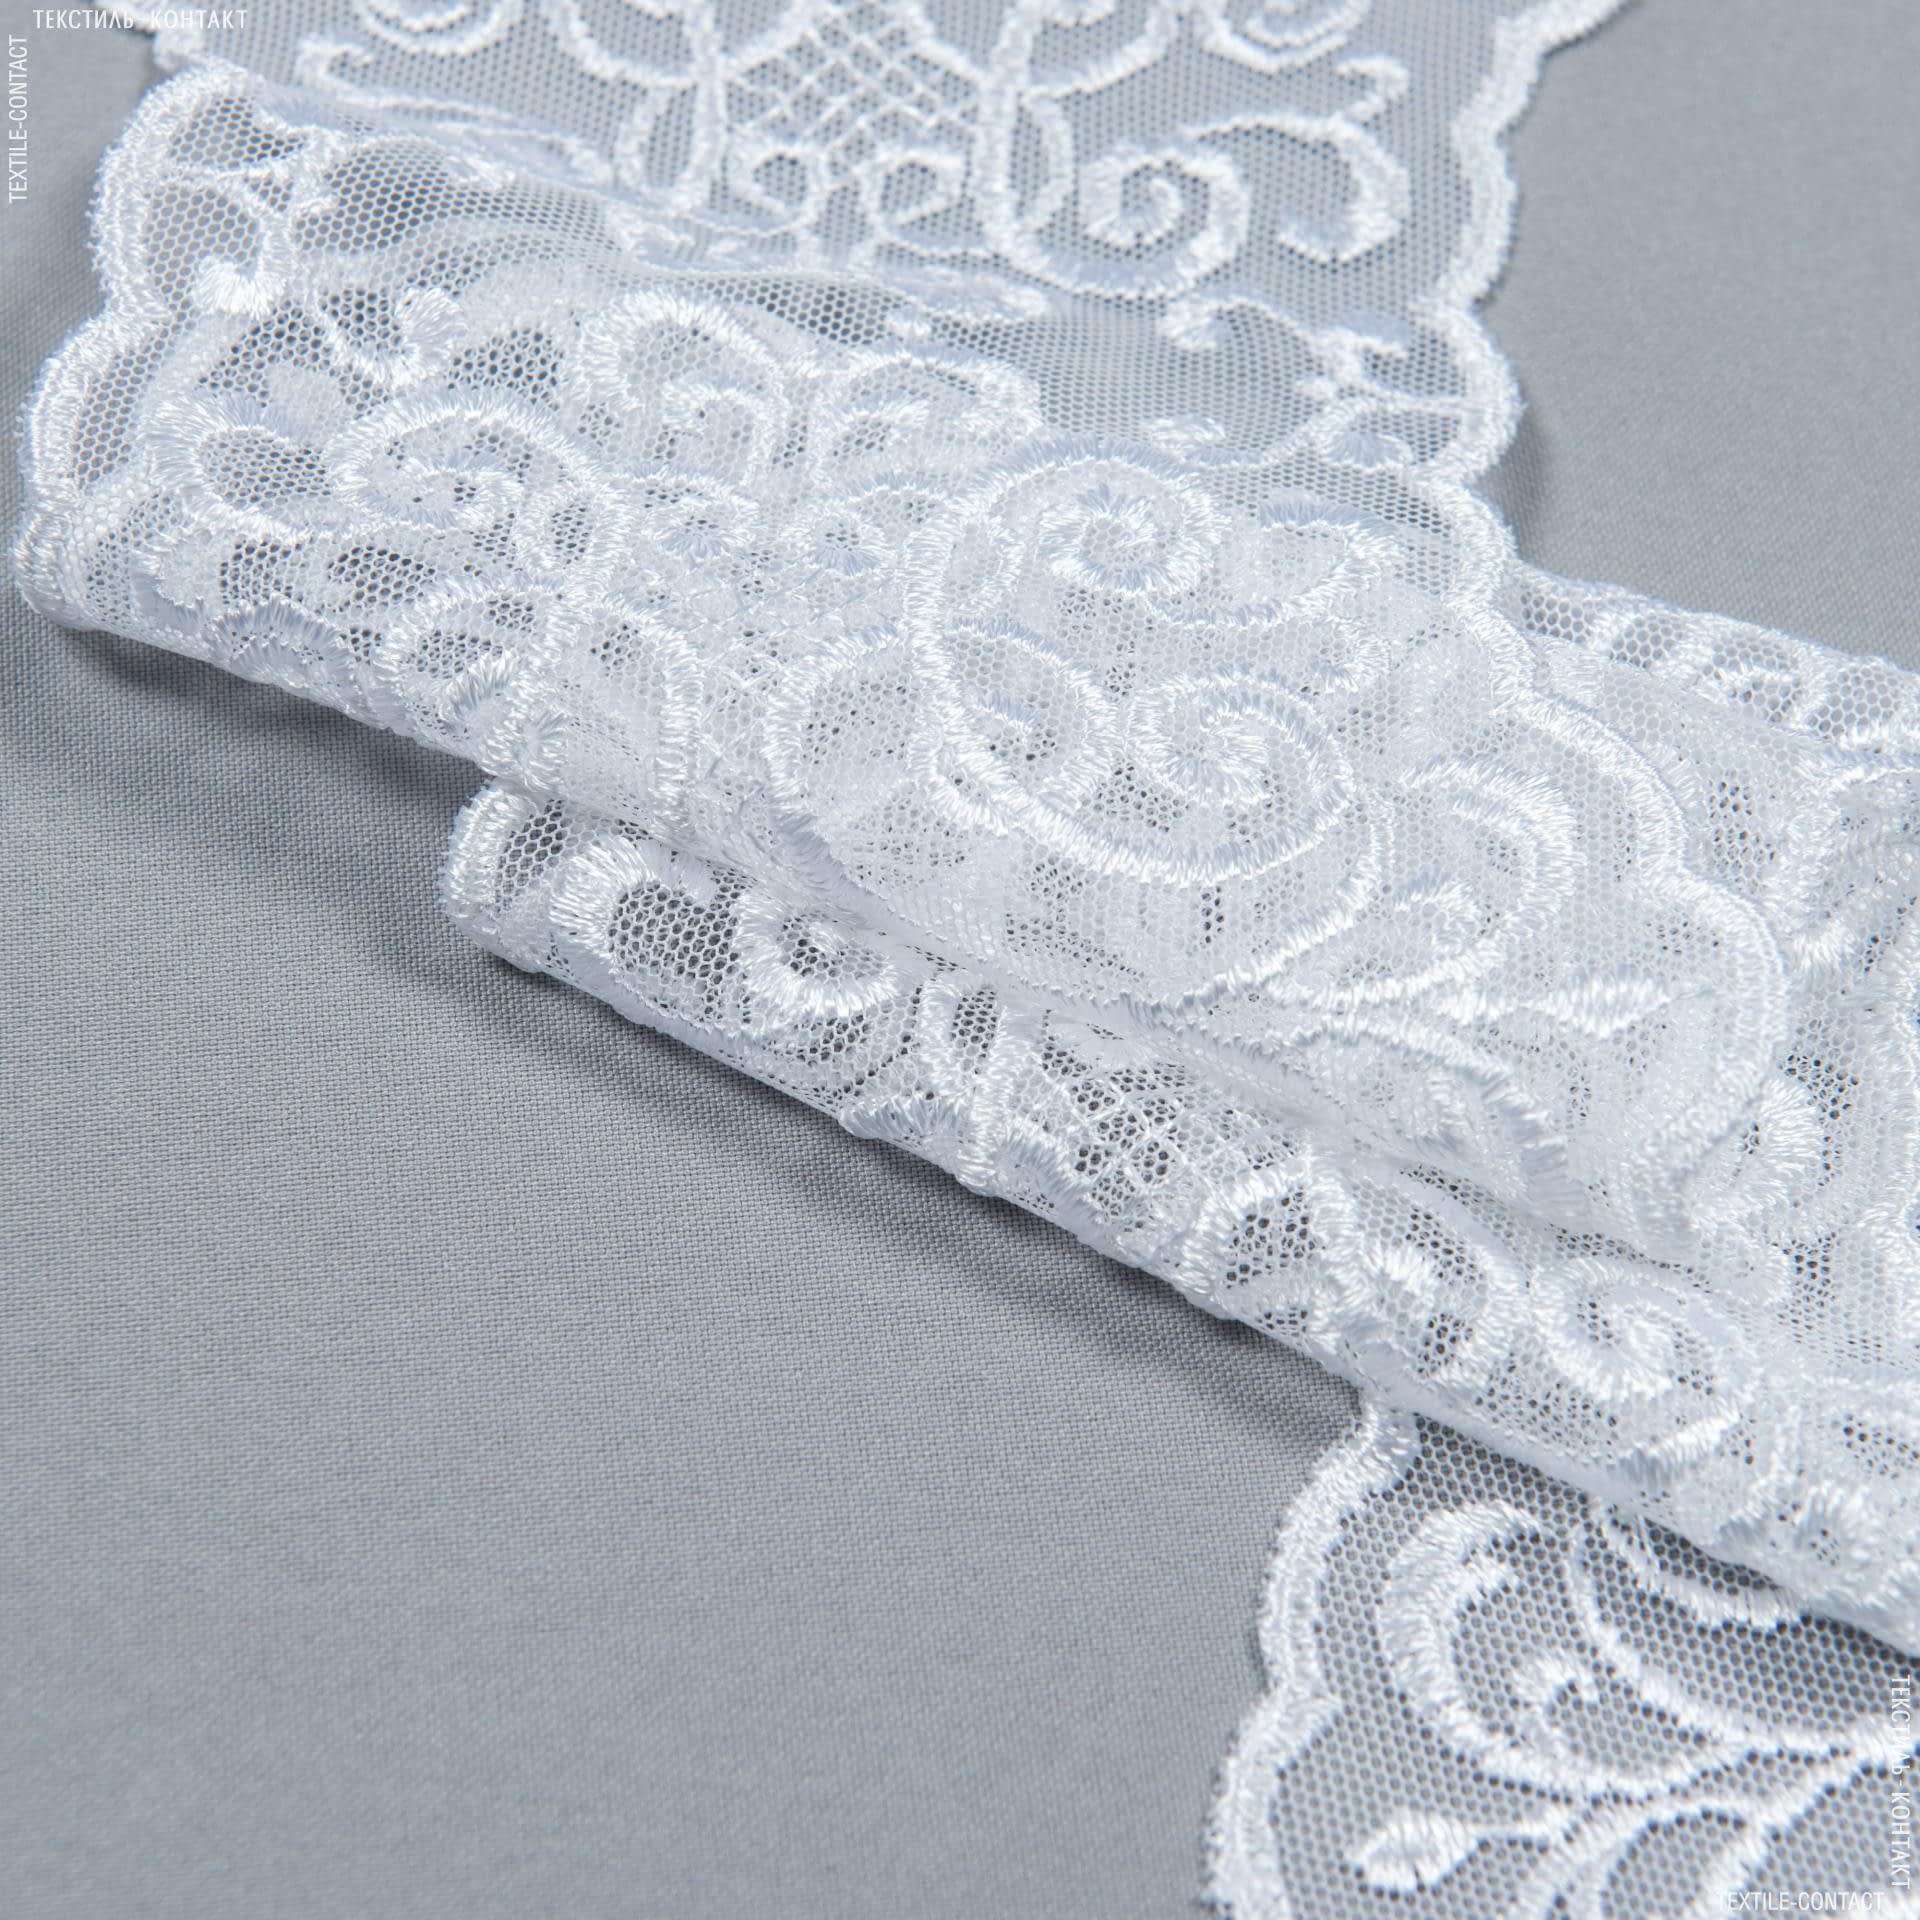 Ткани фурнитура для декора - Декоративное  кружево Ливия цвет белый 16 см